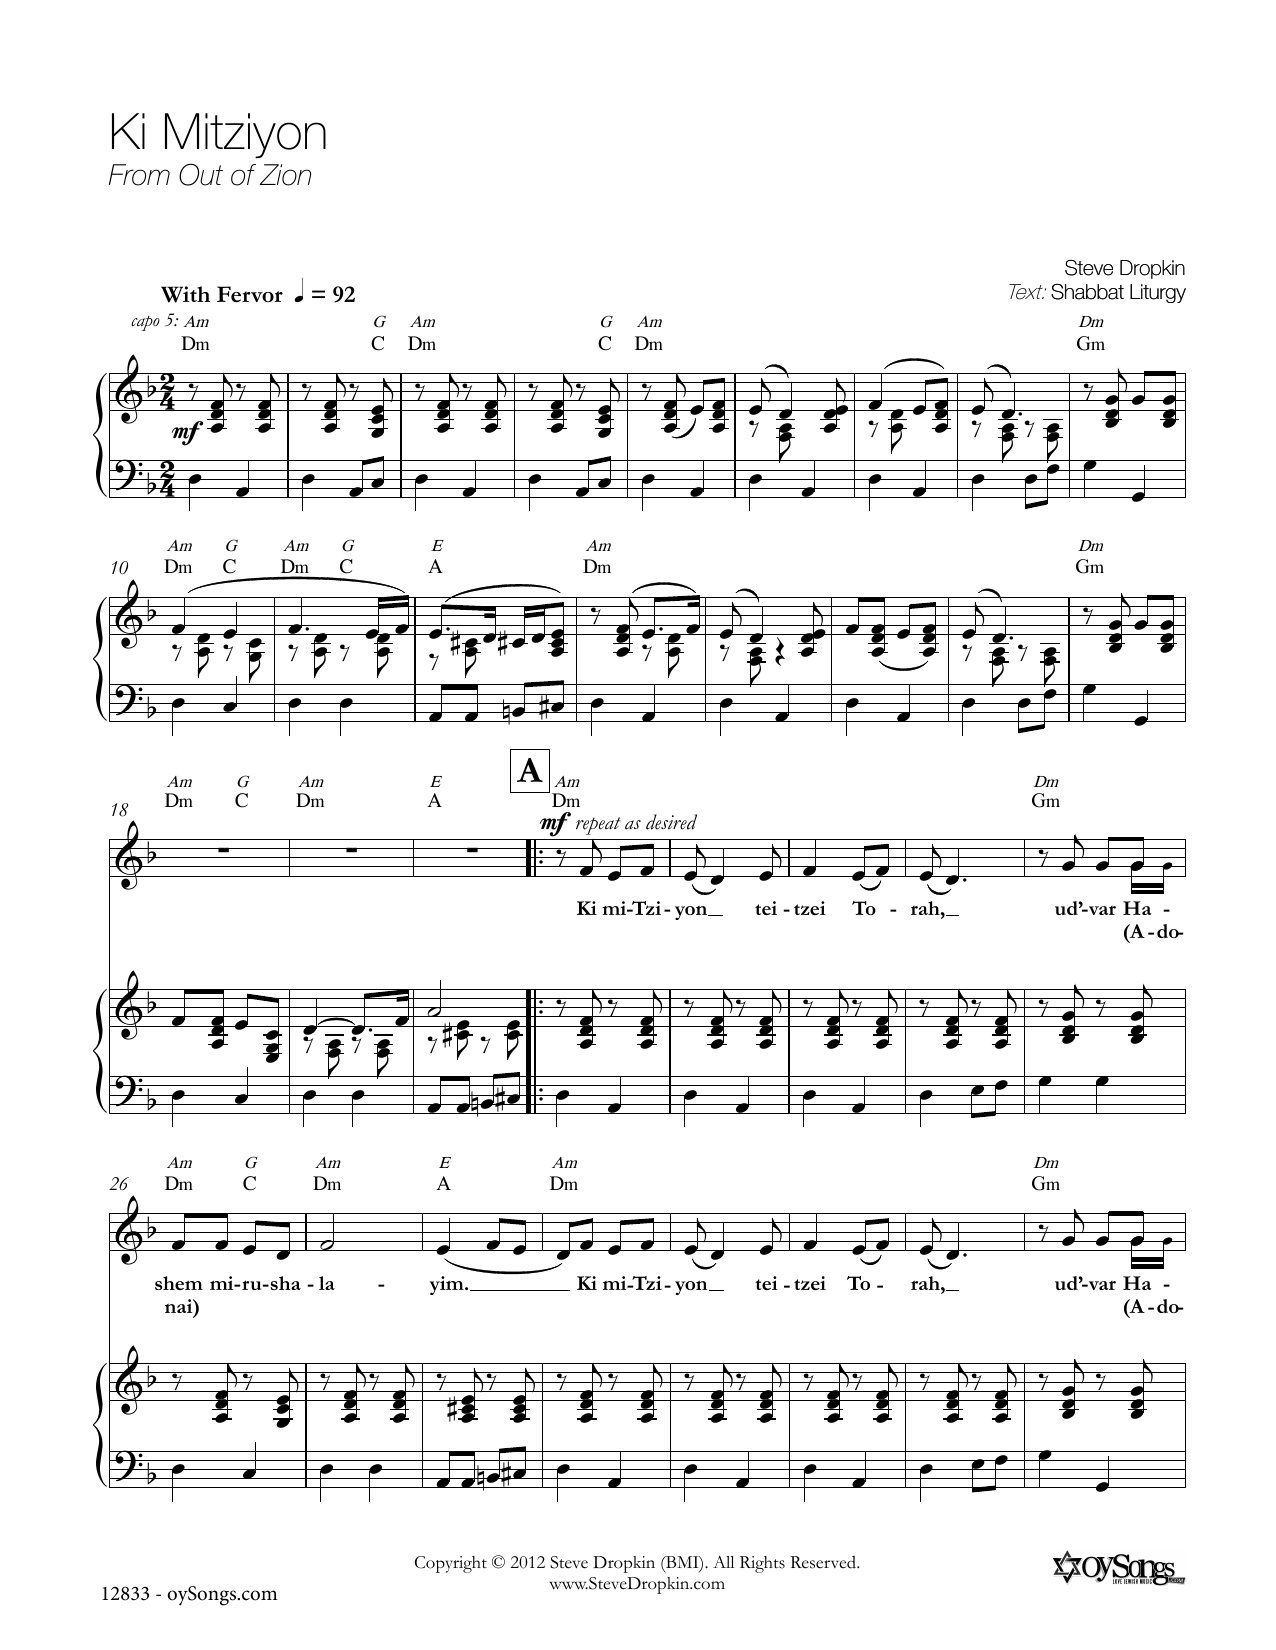 Download Steve Dropkin Ki Mitziyon Sheet Music and learn how to play Melody Line, Lyrics & Chords PDF digital score in minutes